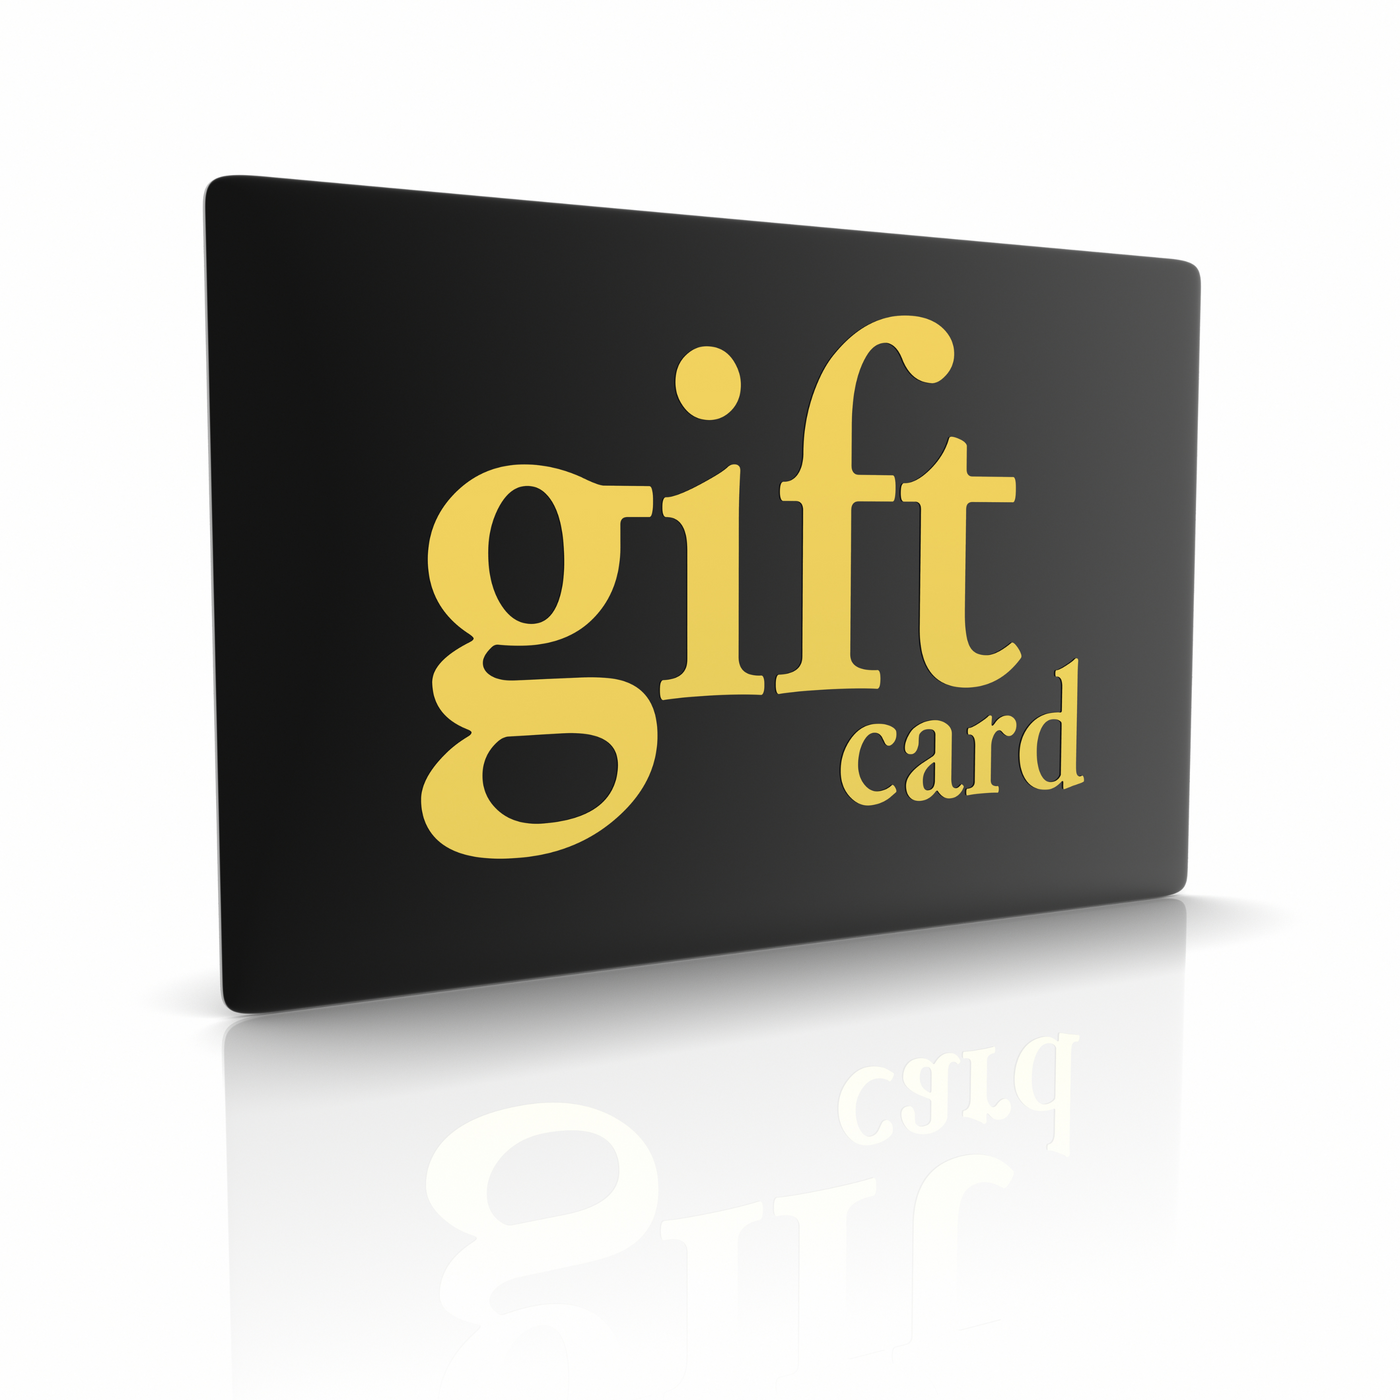 GLITTER & SPICE GIFT CARD - USD